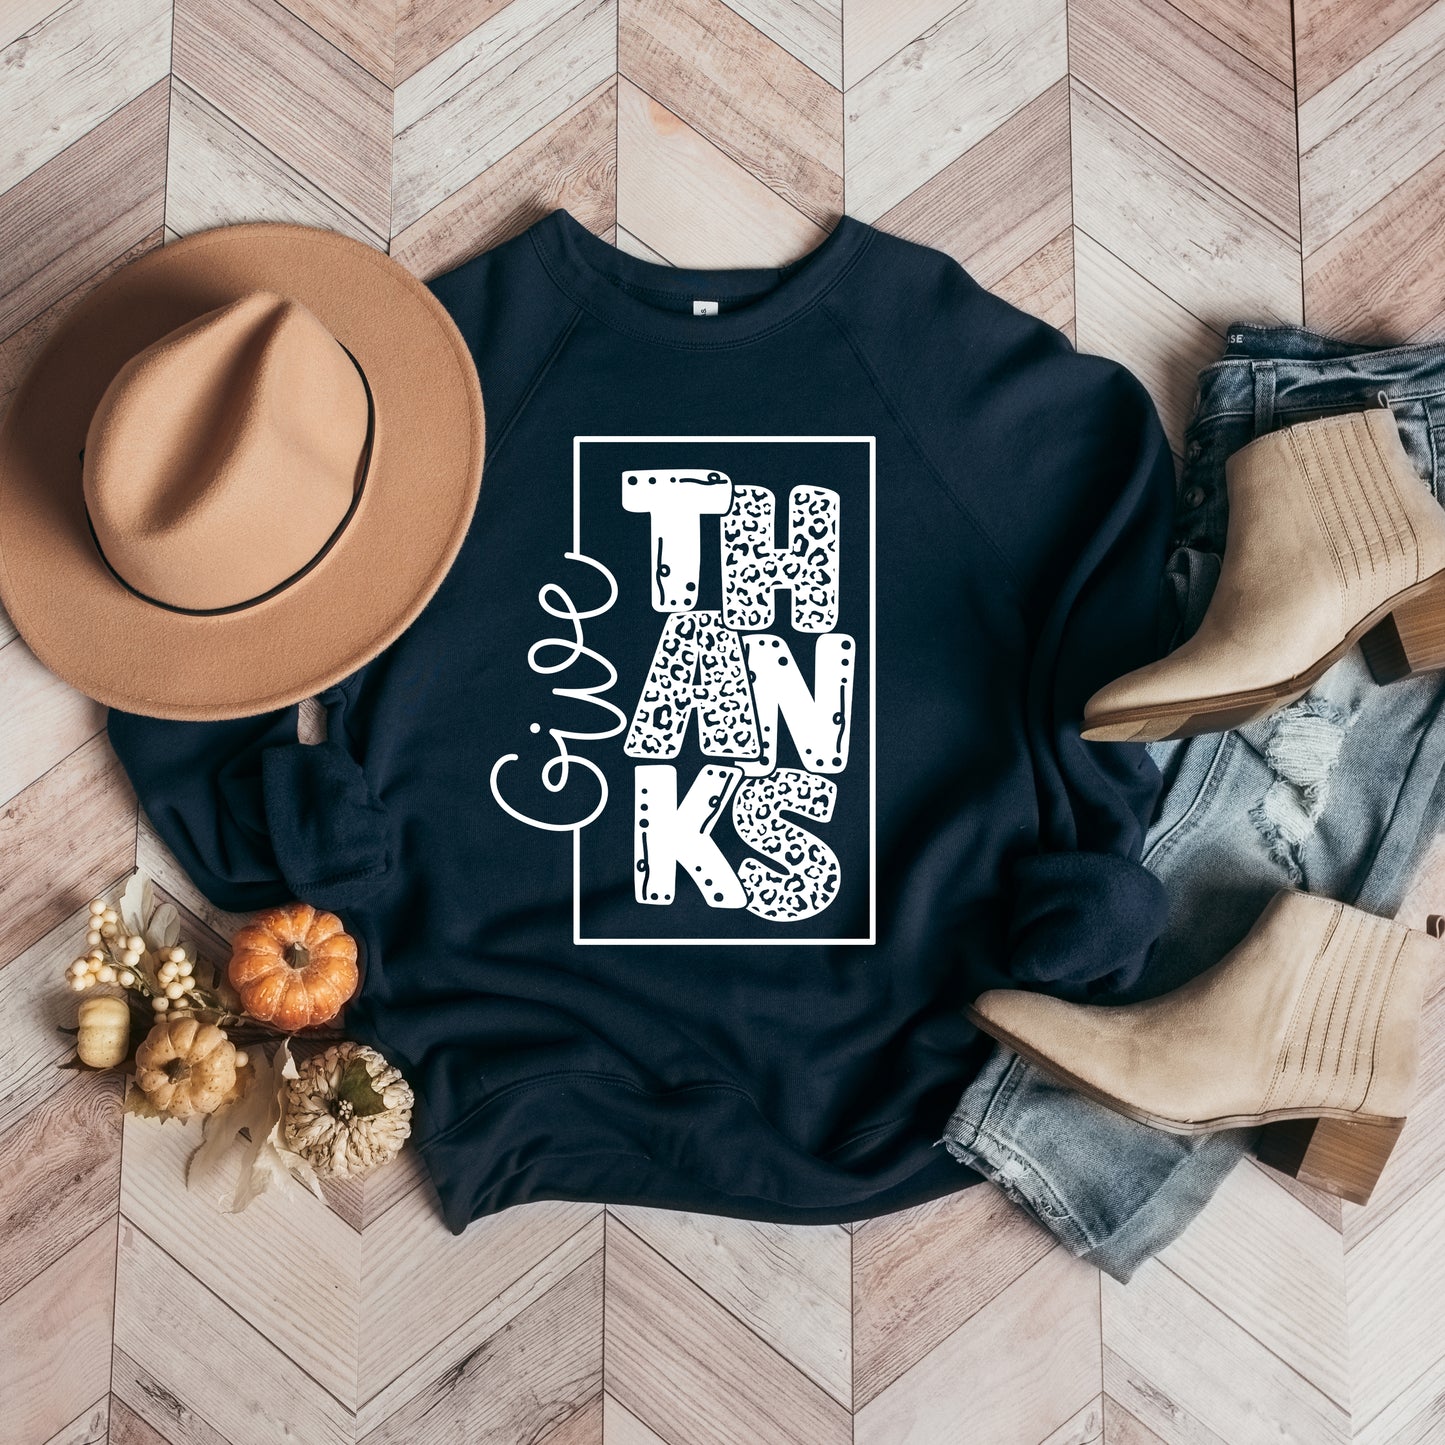 Give Thanks Square | Bella Canvas Sweatshirt